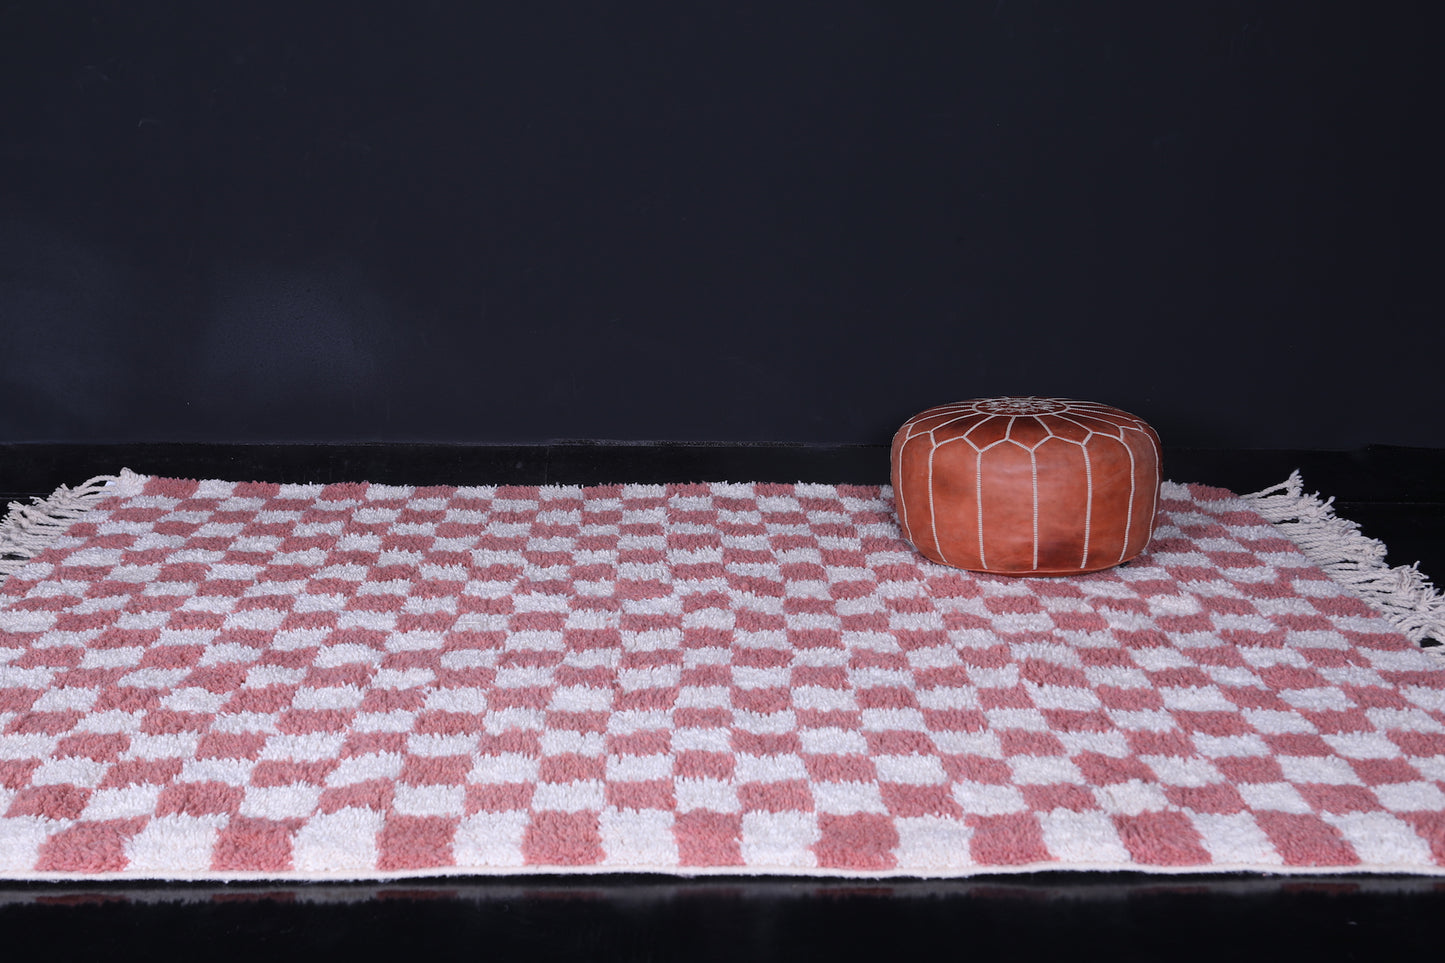 Moroccan Checkered rug - Rose checkered rug